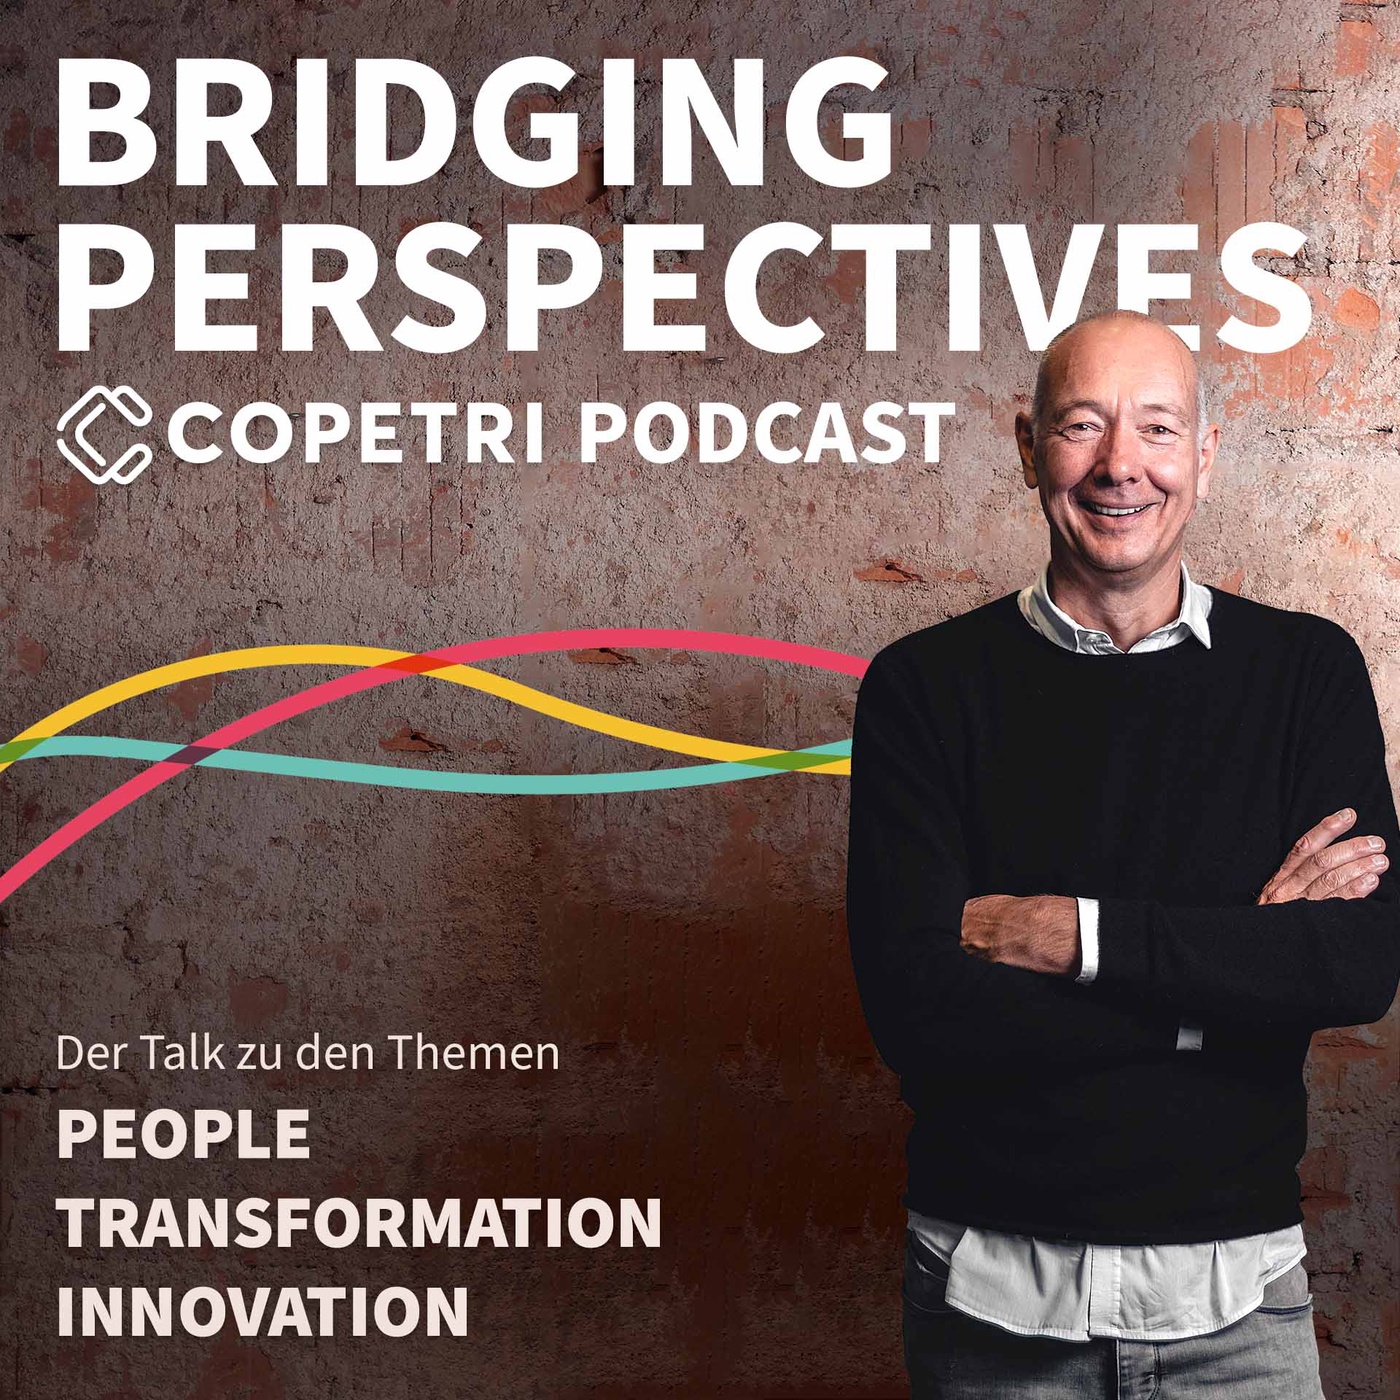 Bridging Perspectives - COPETRI Podcast